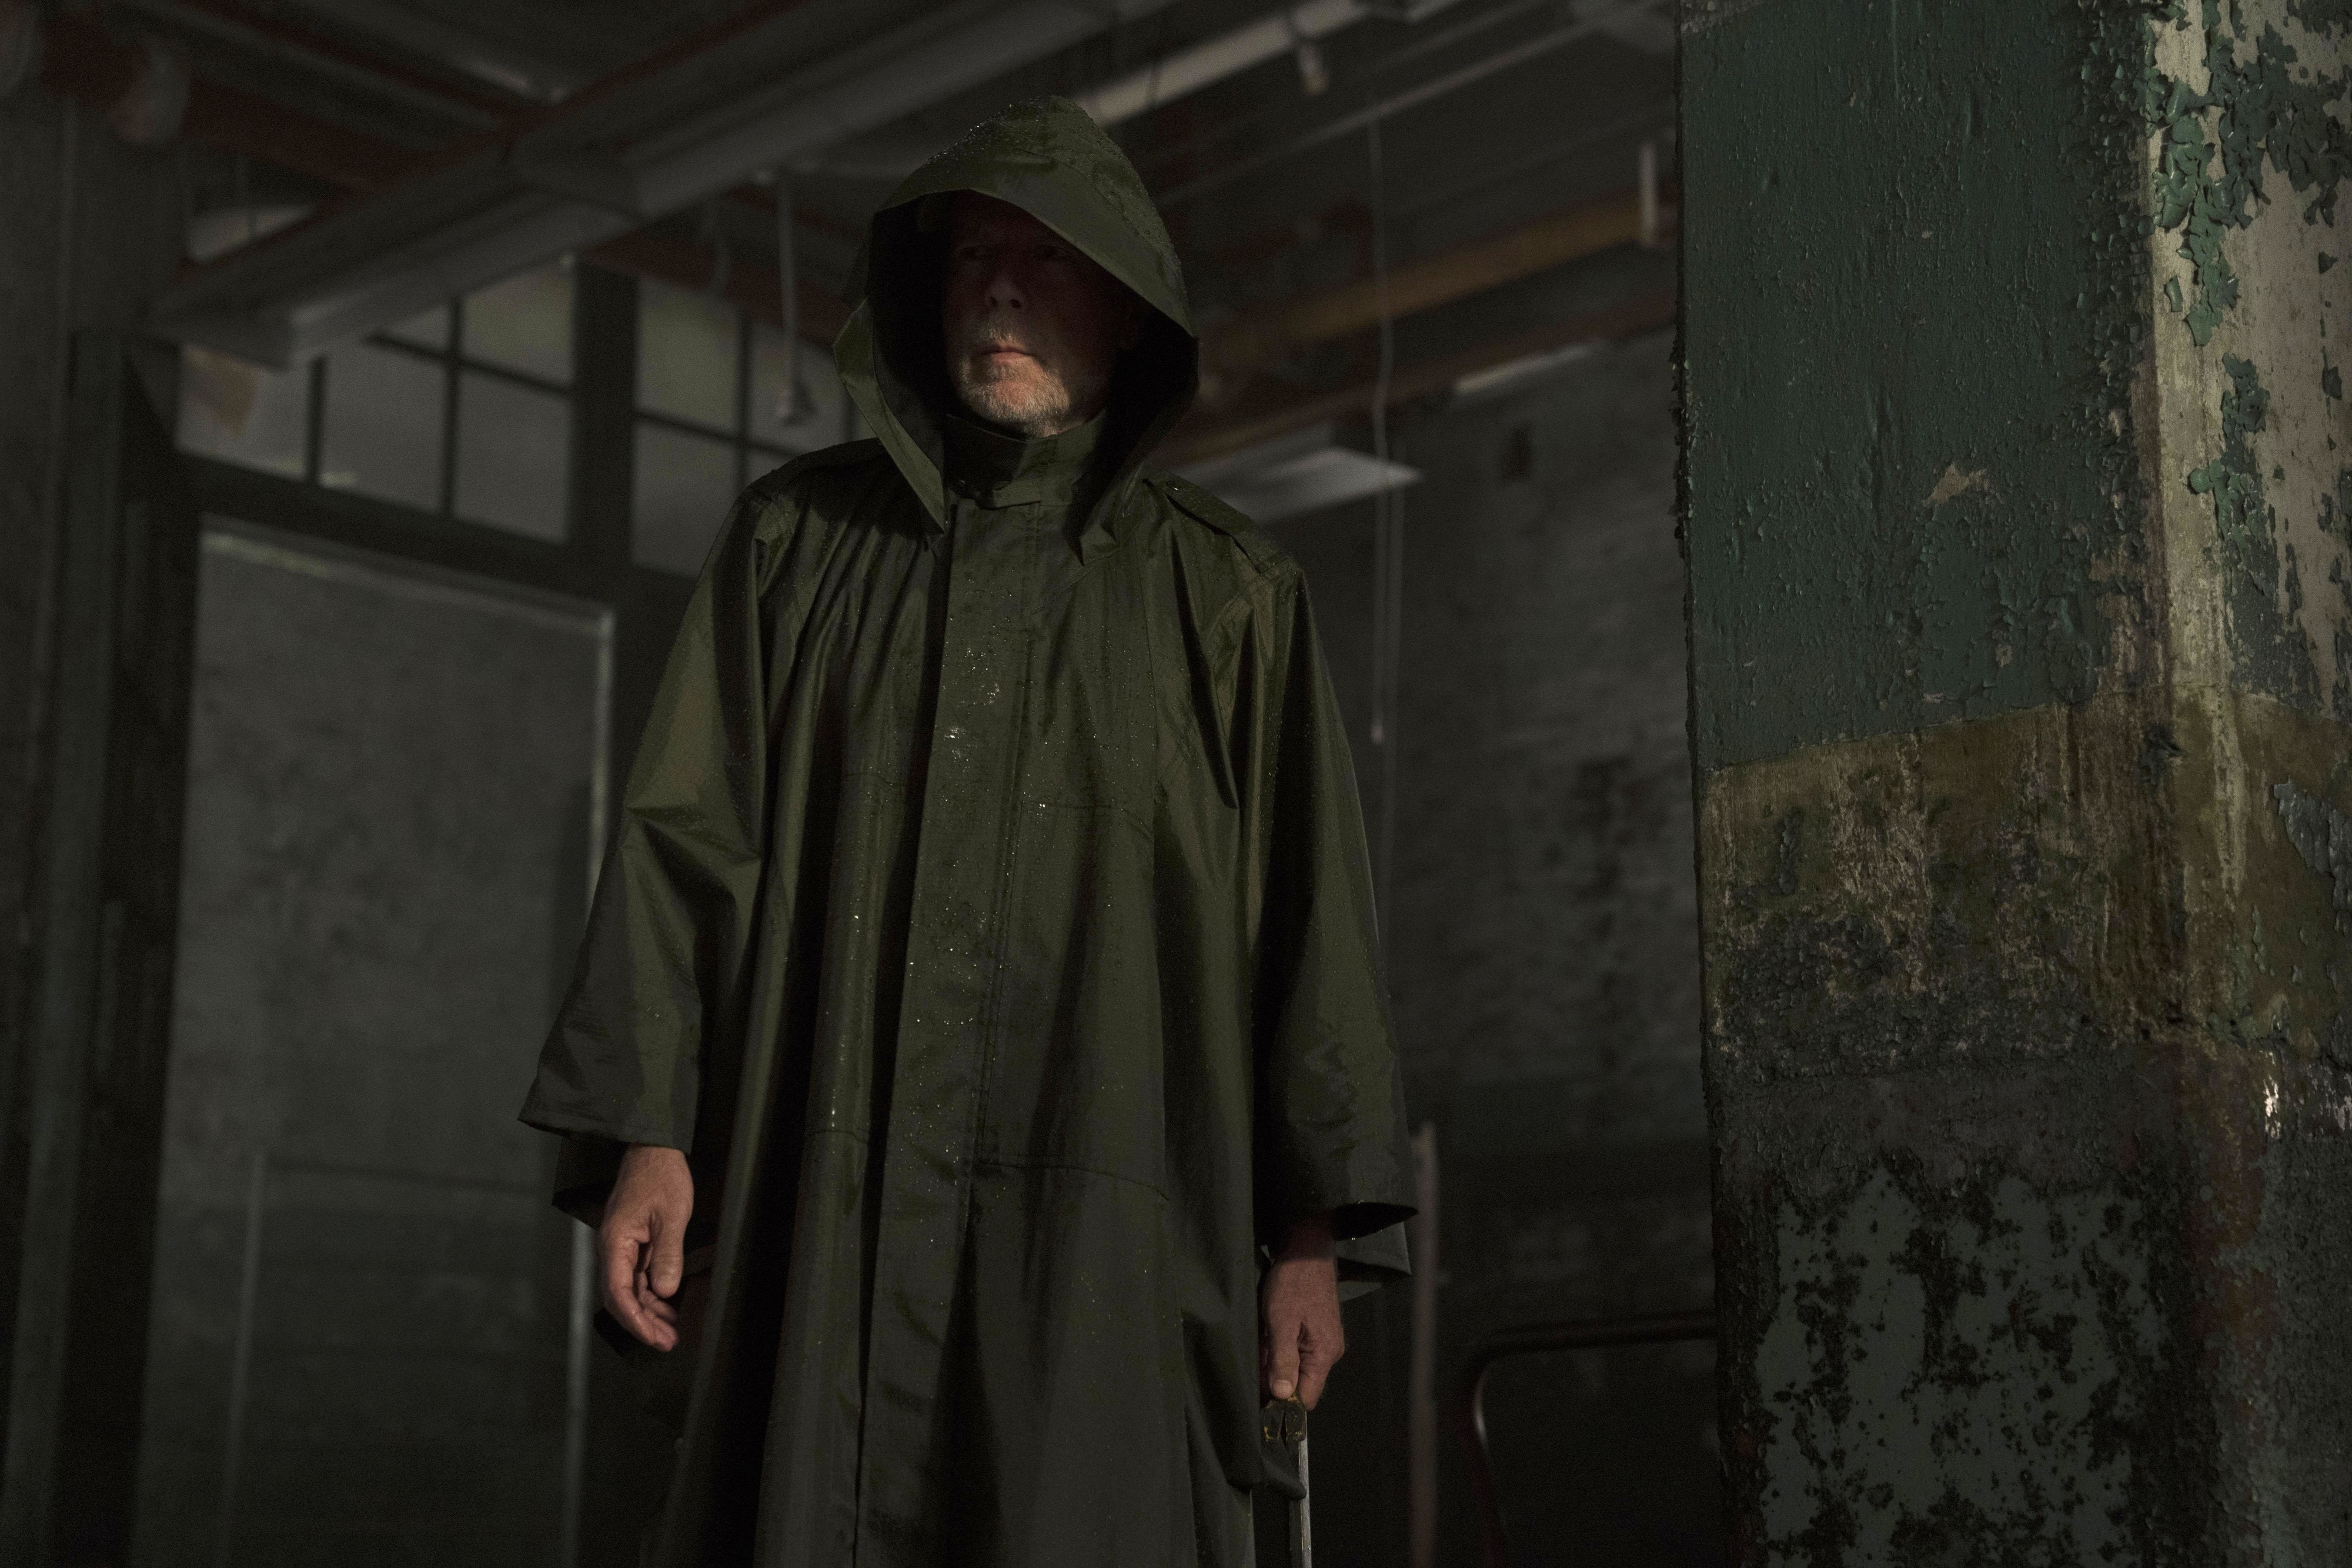 Bruce Willis wears a grey raincoat in a decrepit factory